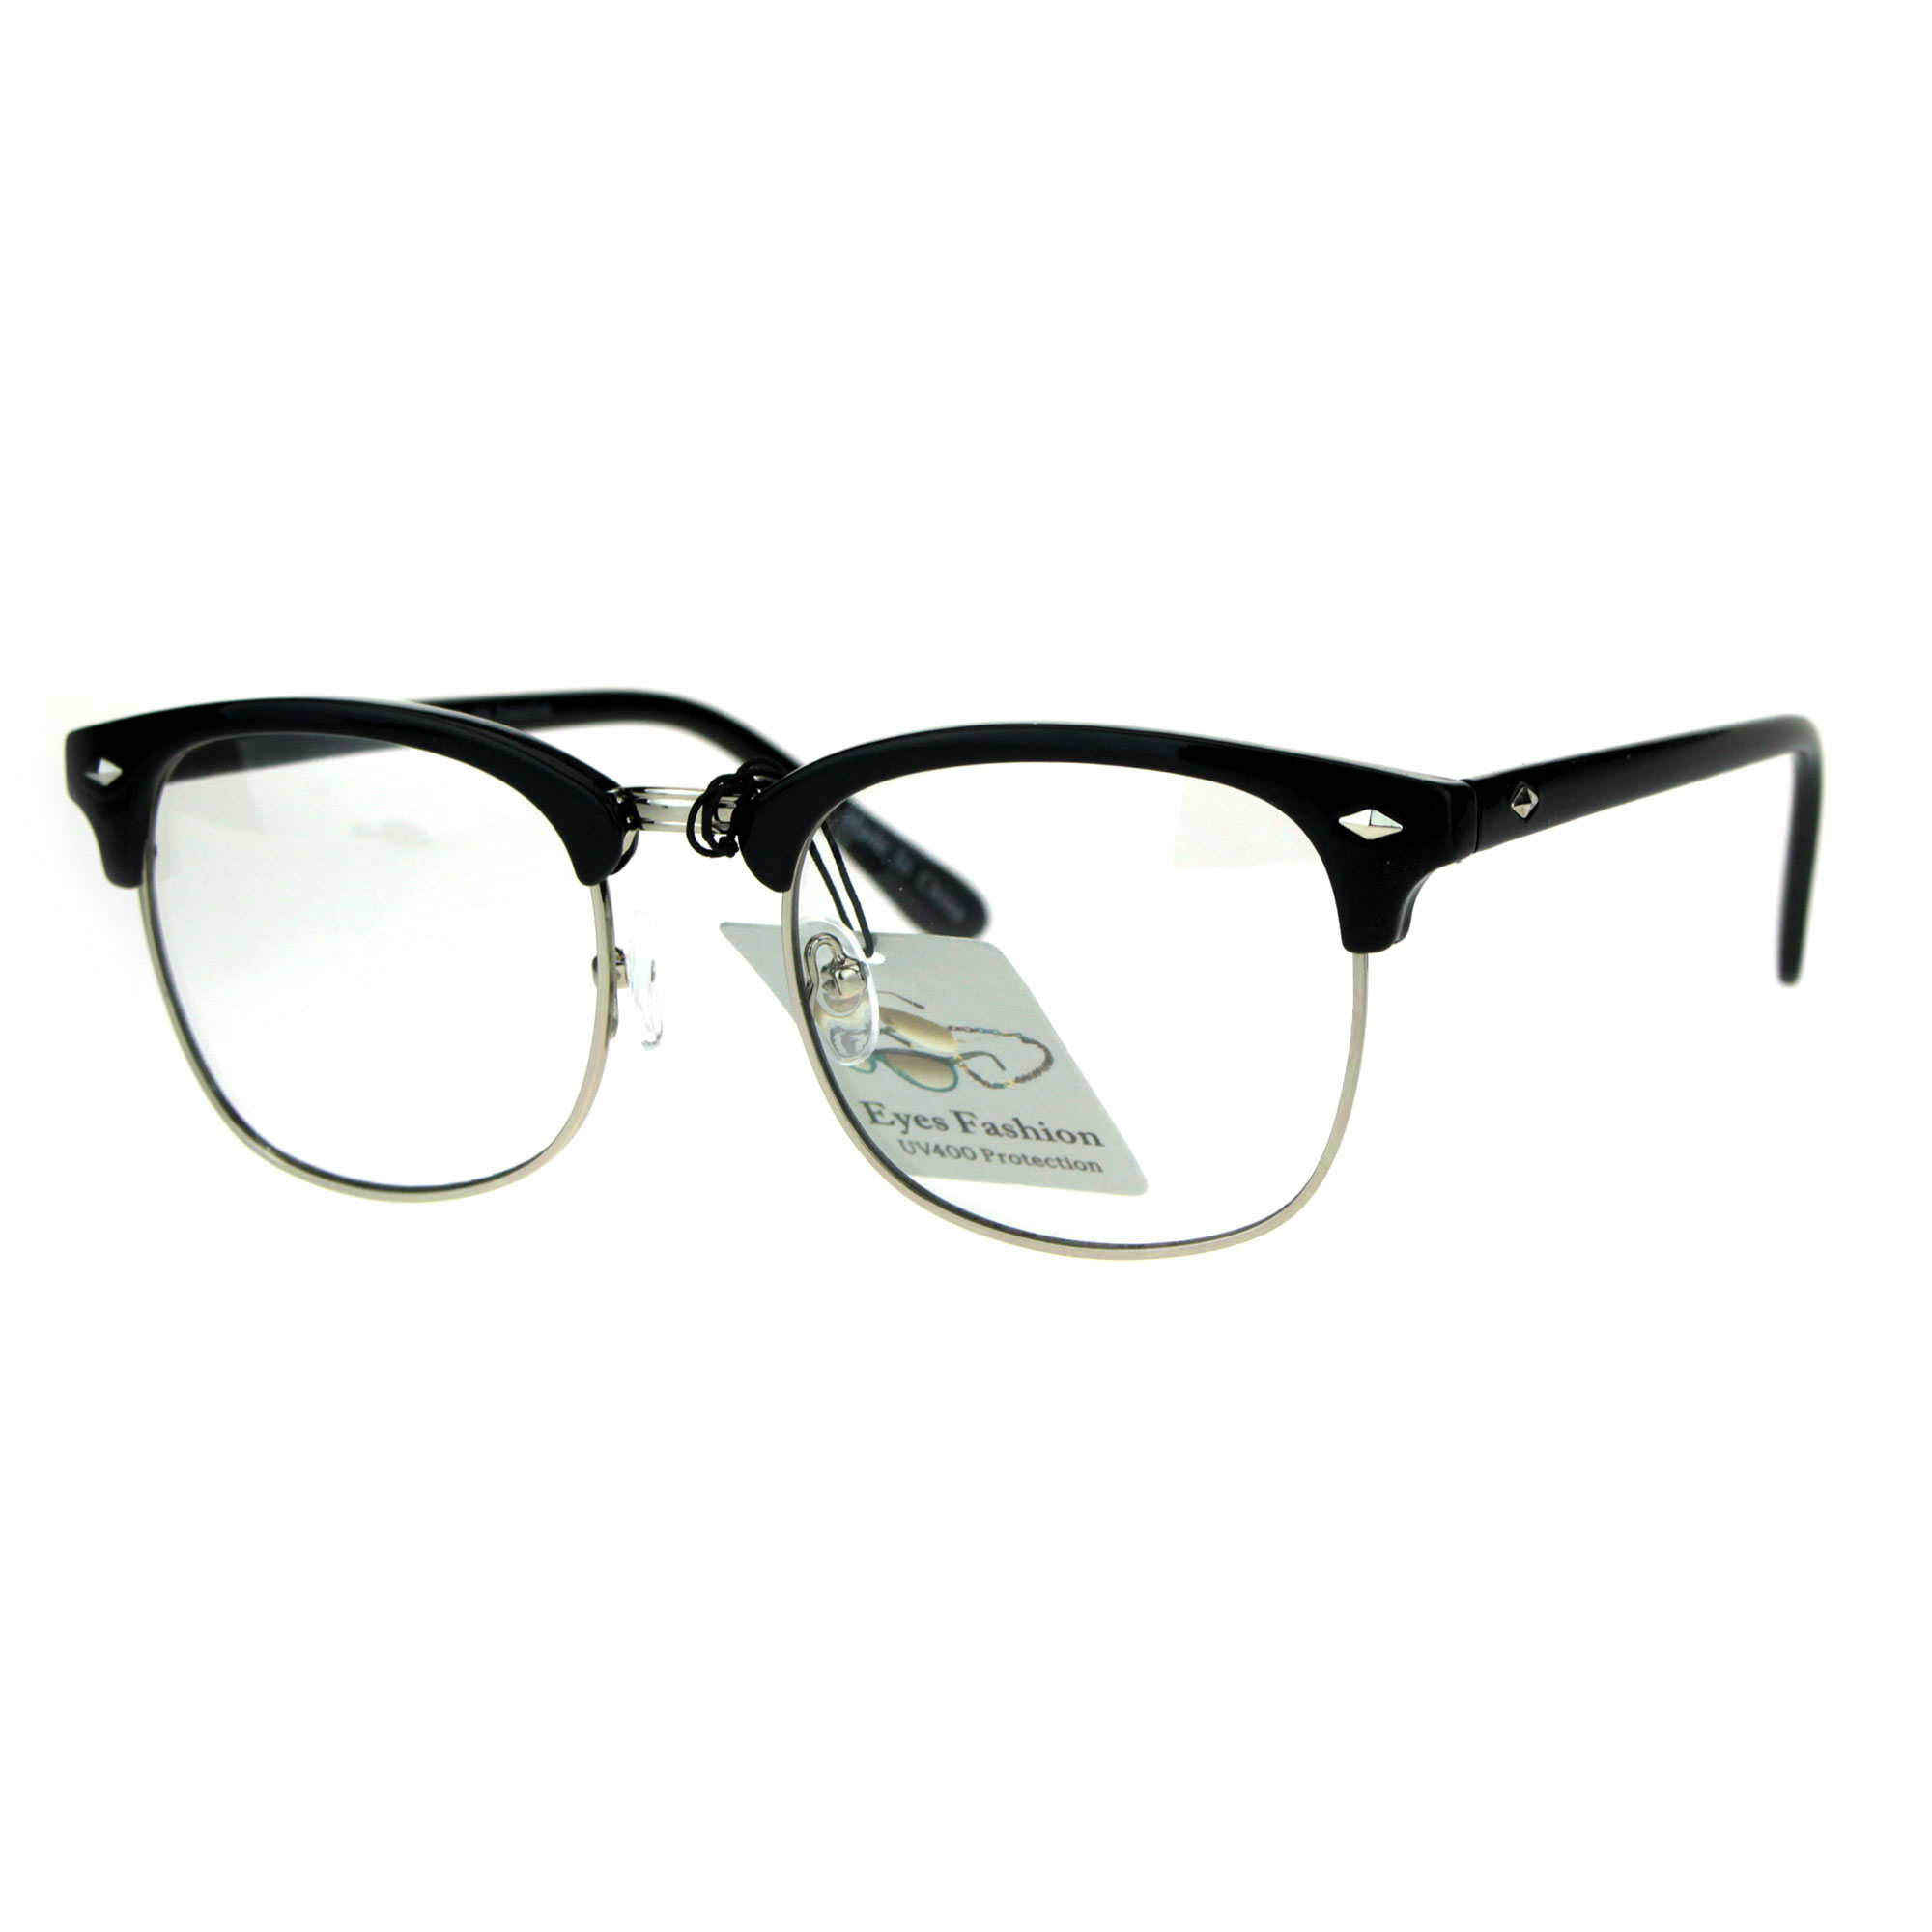 Mens Classic Horned Half Rim Hipster Nerdy Retro Eye Glasses Ebay 